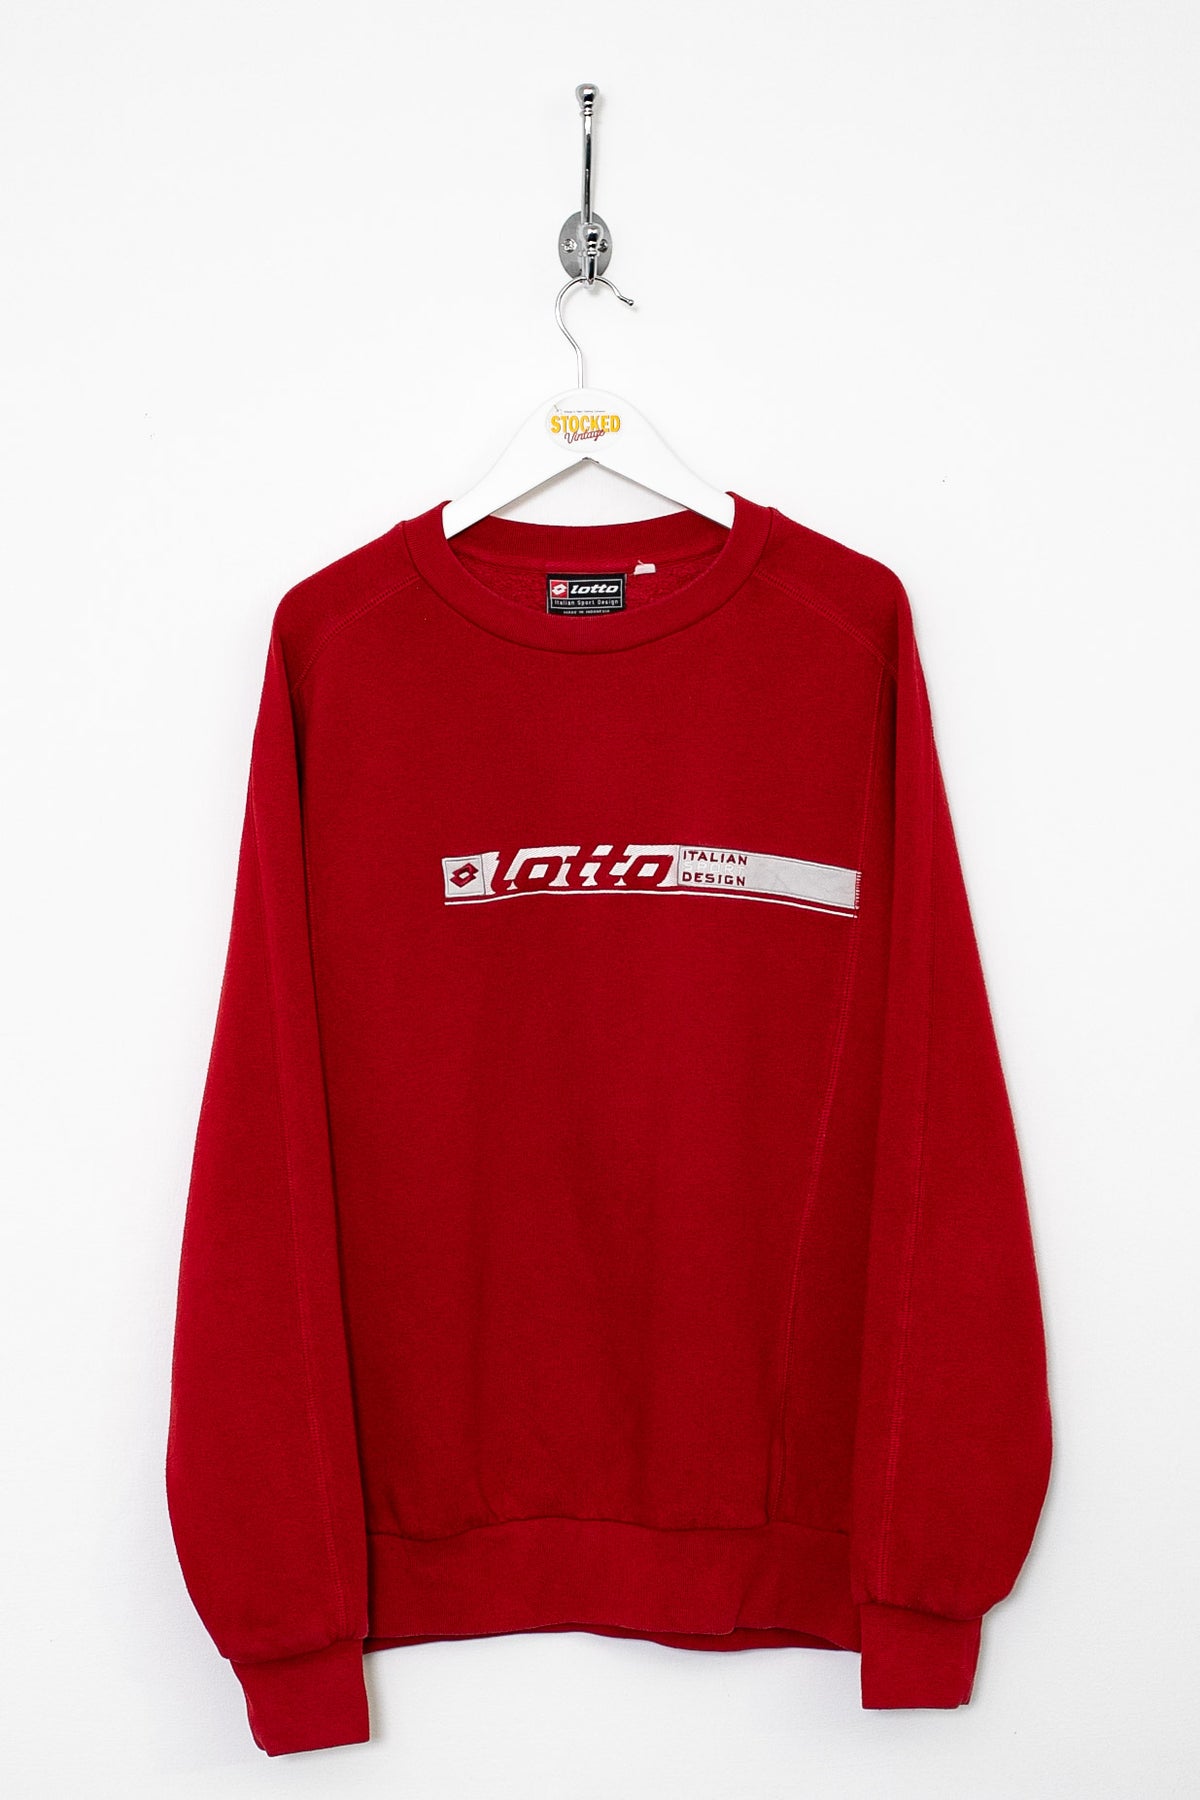 00s Lotto Sweatshirt (M)